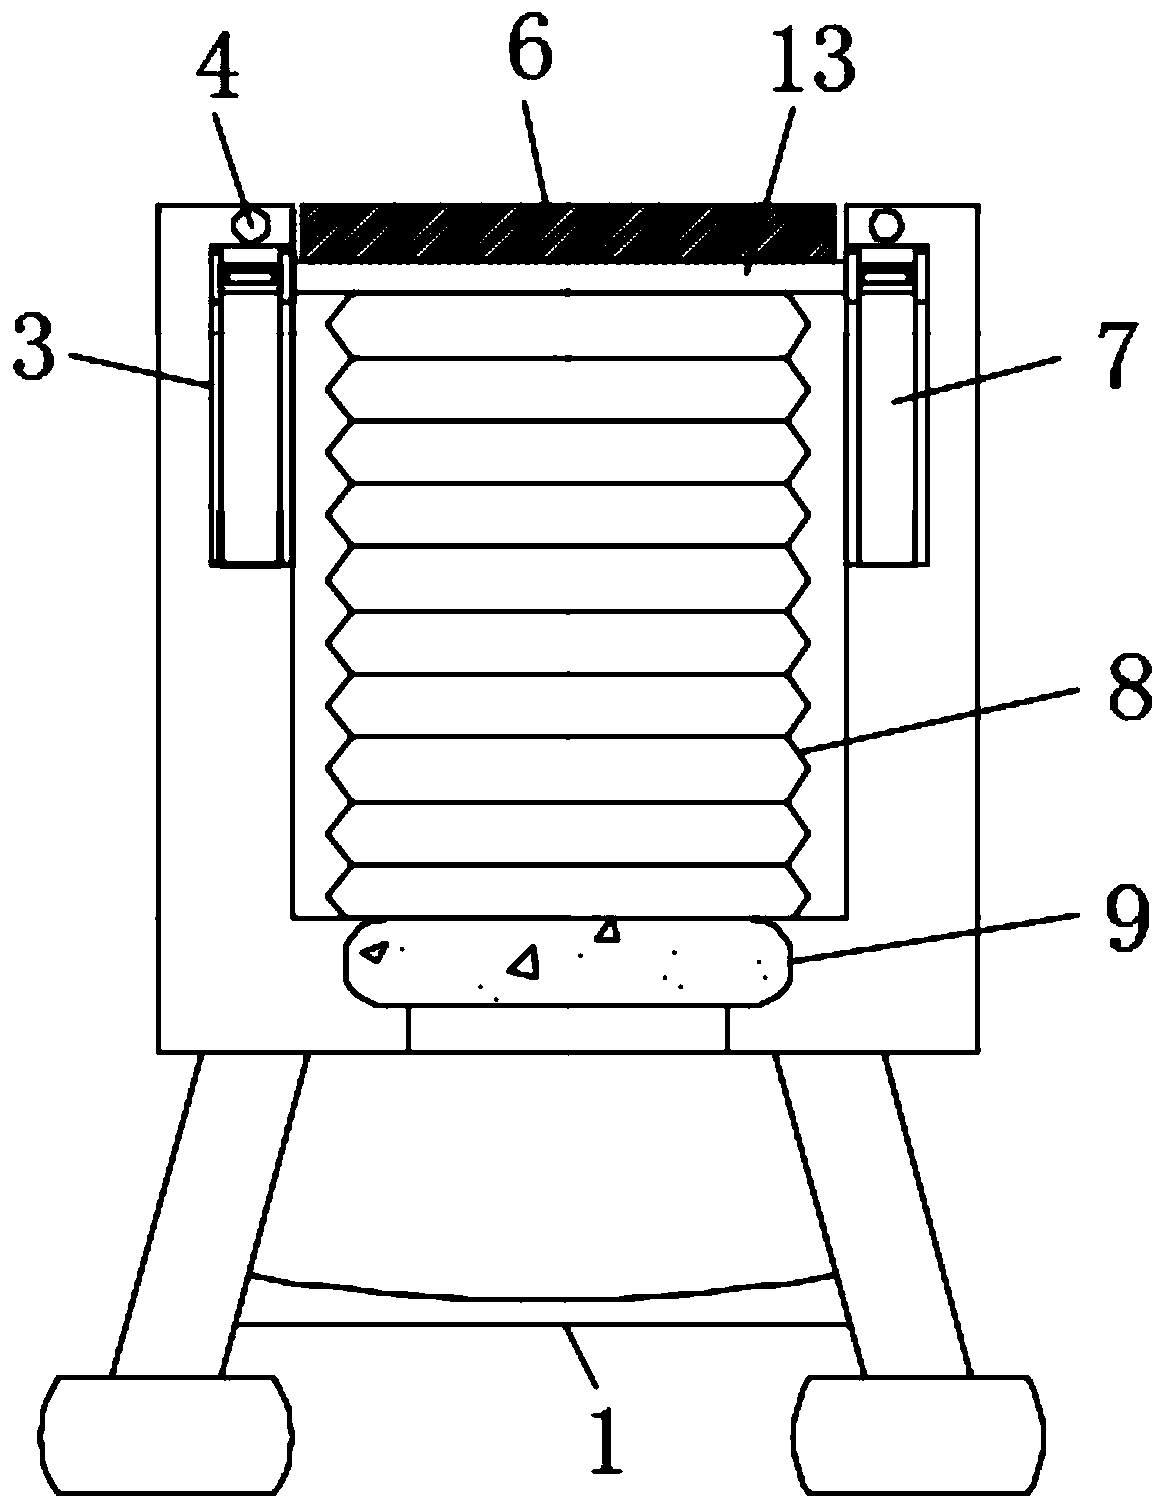 Automatic adjusting mechanism of solar panel